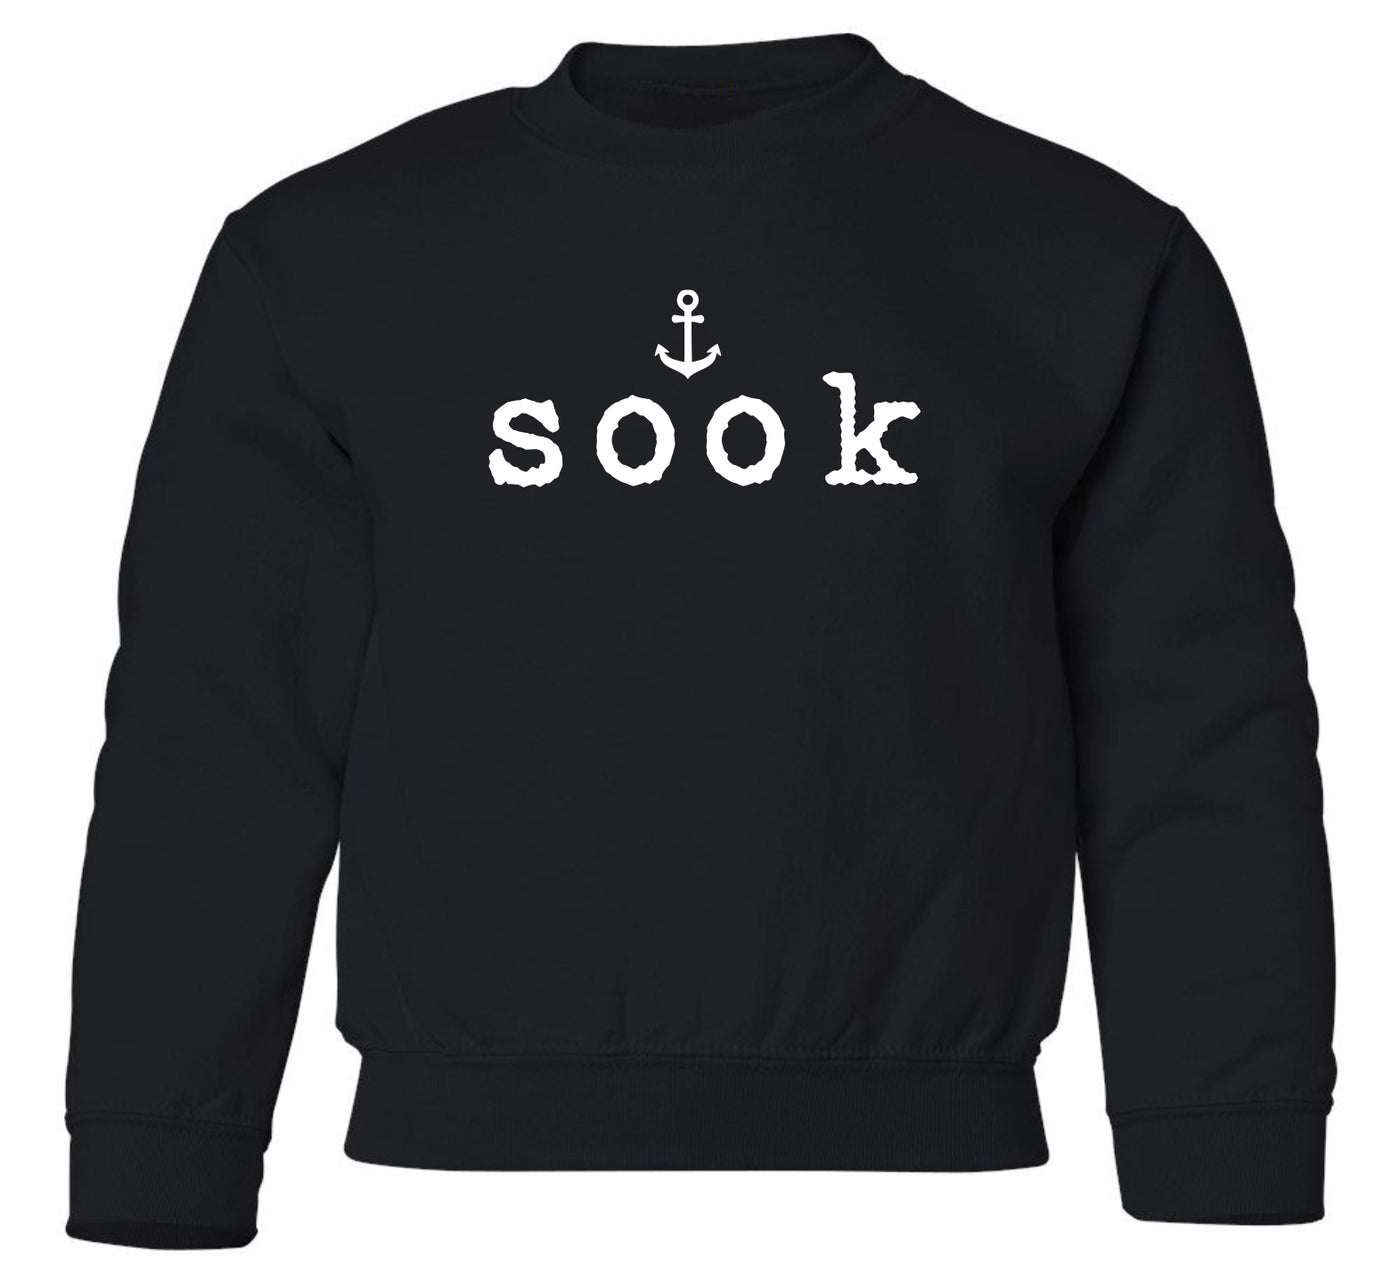 "Sook" Toddler/Youth Crewneck Sweatshirt